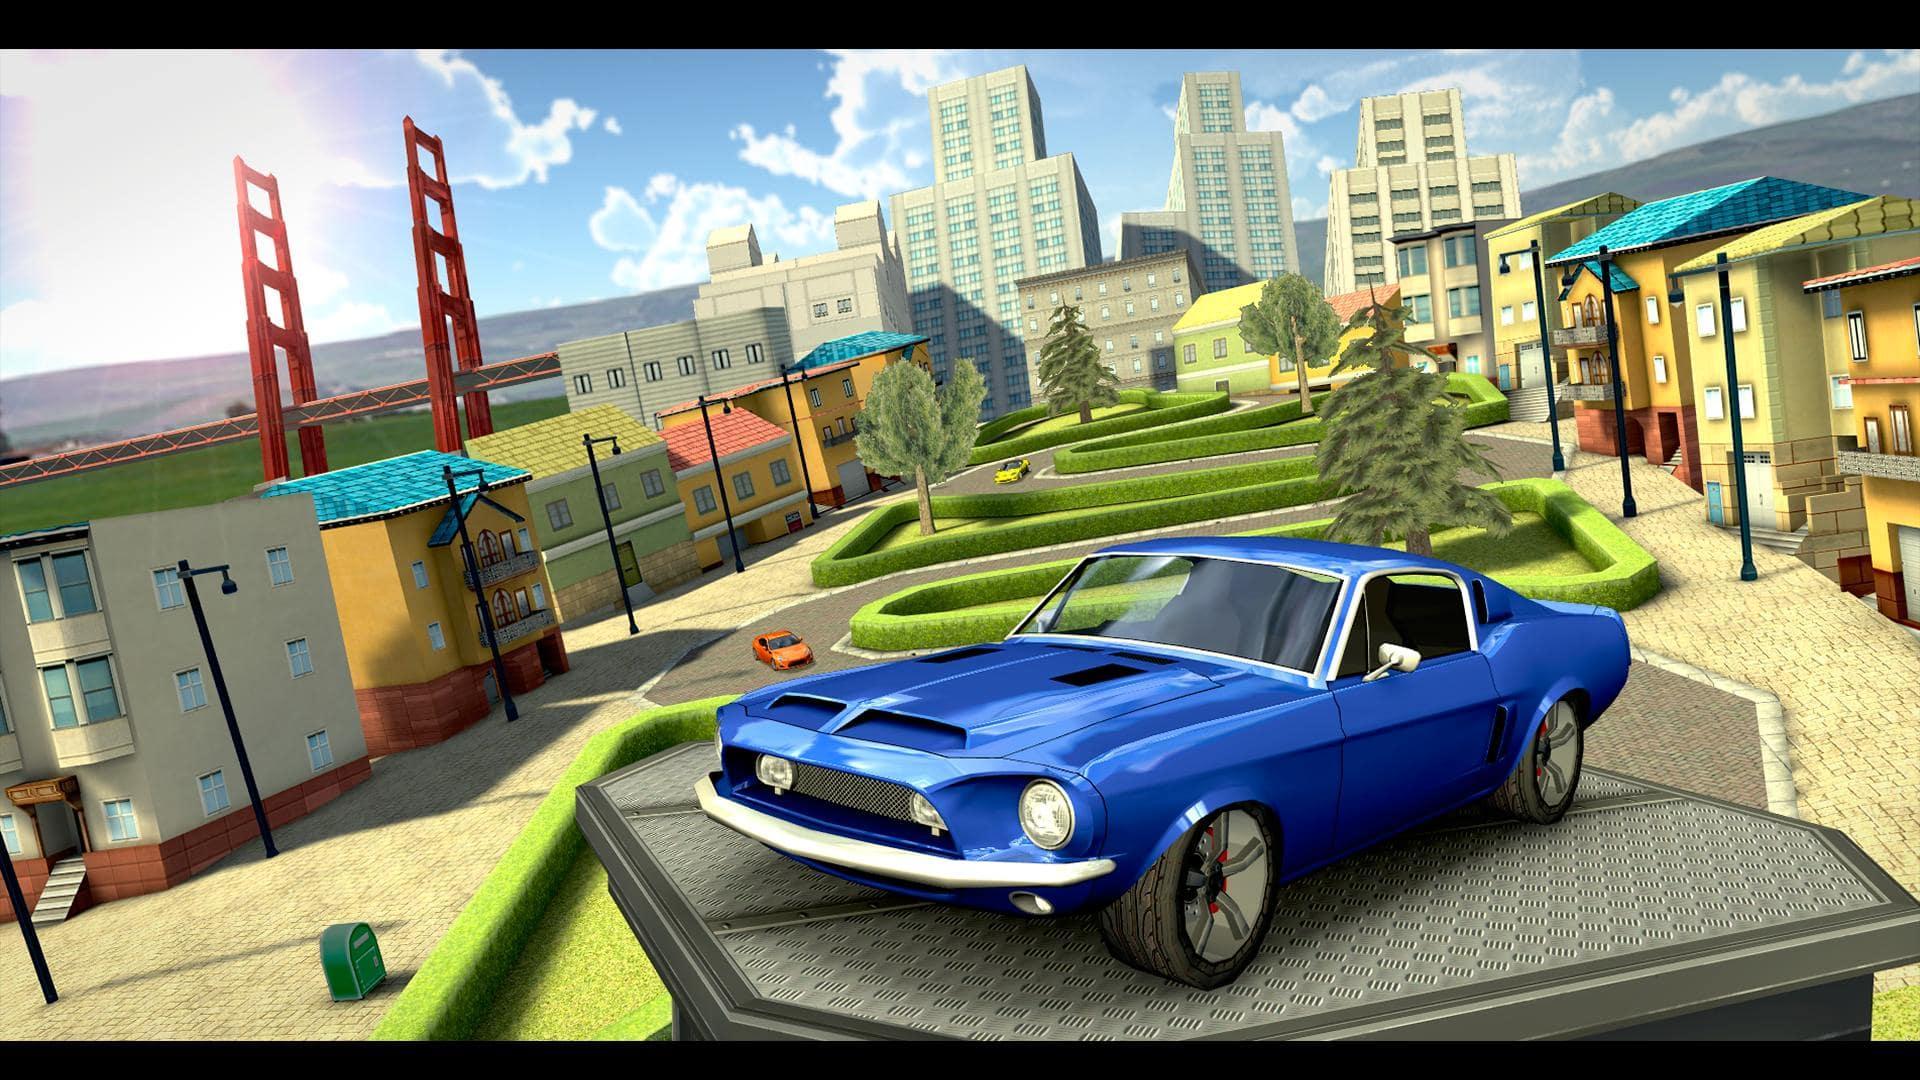 Extreme Car Driving Simulator - free online game